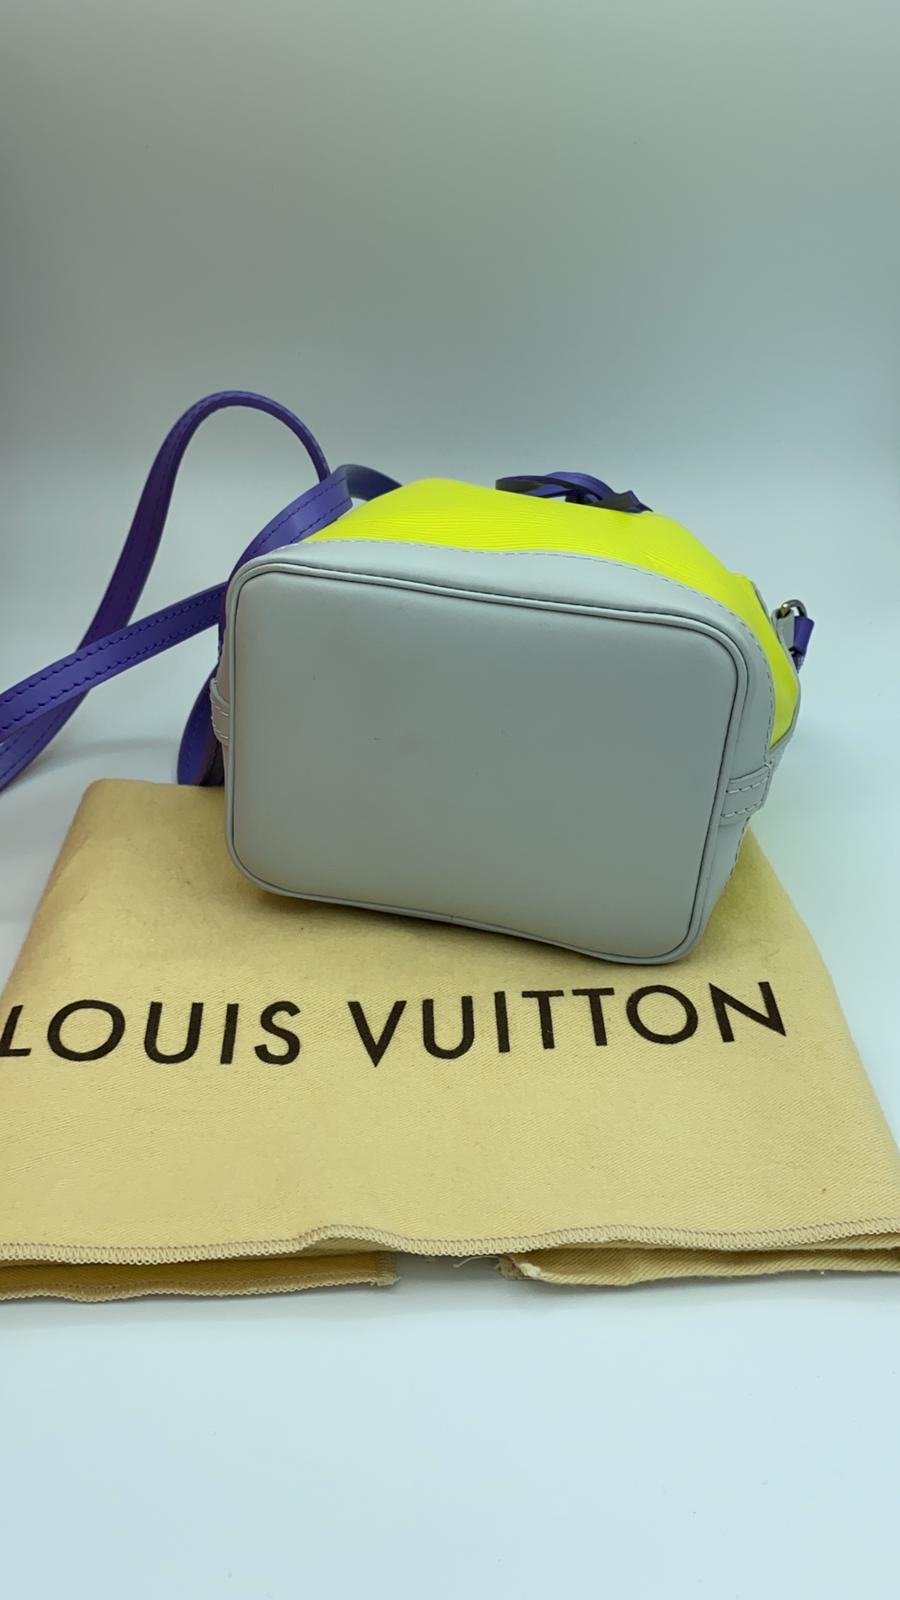 2016 Louis Vuitton Nano Noe Epi leather yellow purple satchel
Still with dust bag and box like unworn
measurements: 16 h cm * 13 cm depth is 9 cm